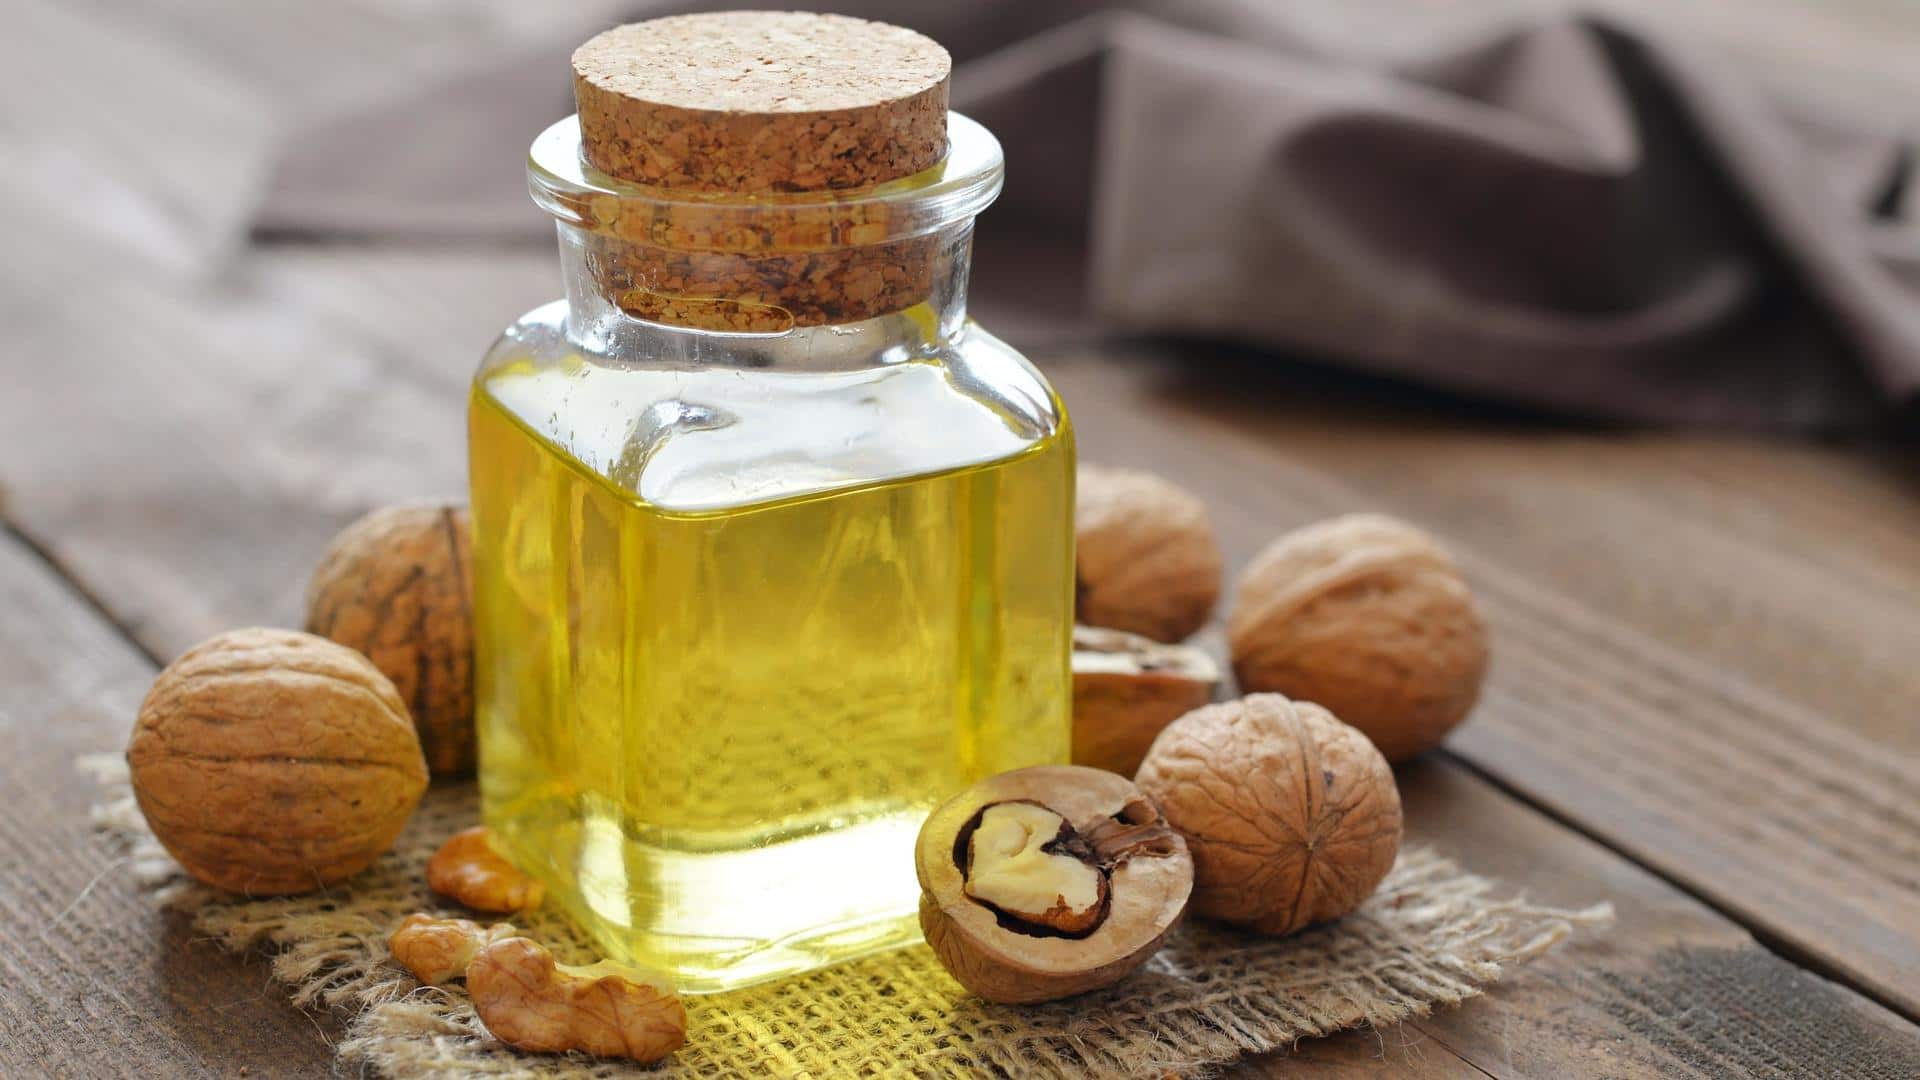 Walnut oil: Let's explore its top 5 health benefits